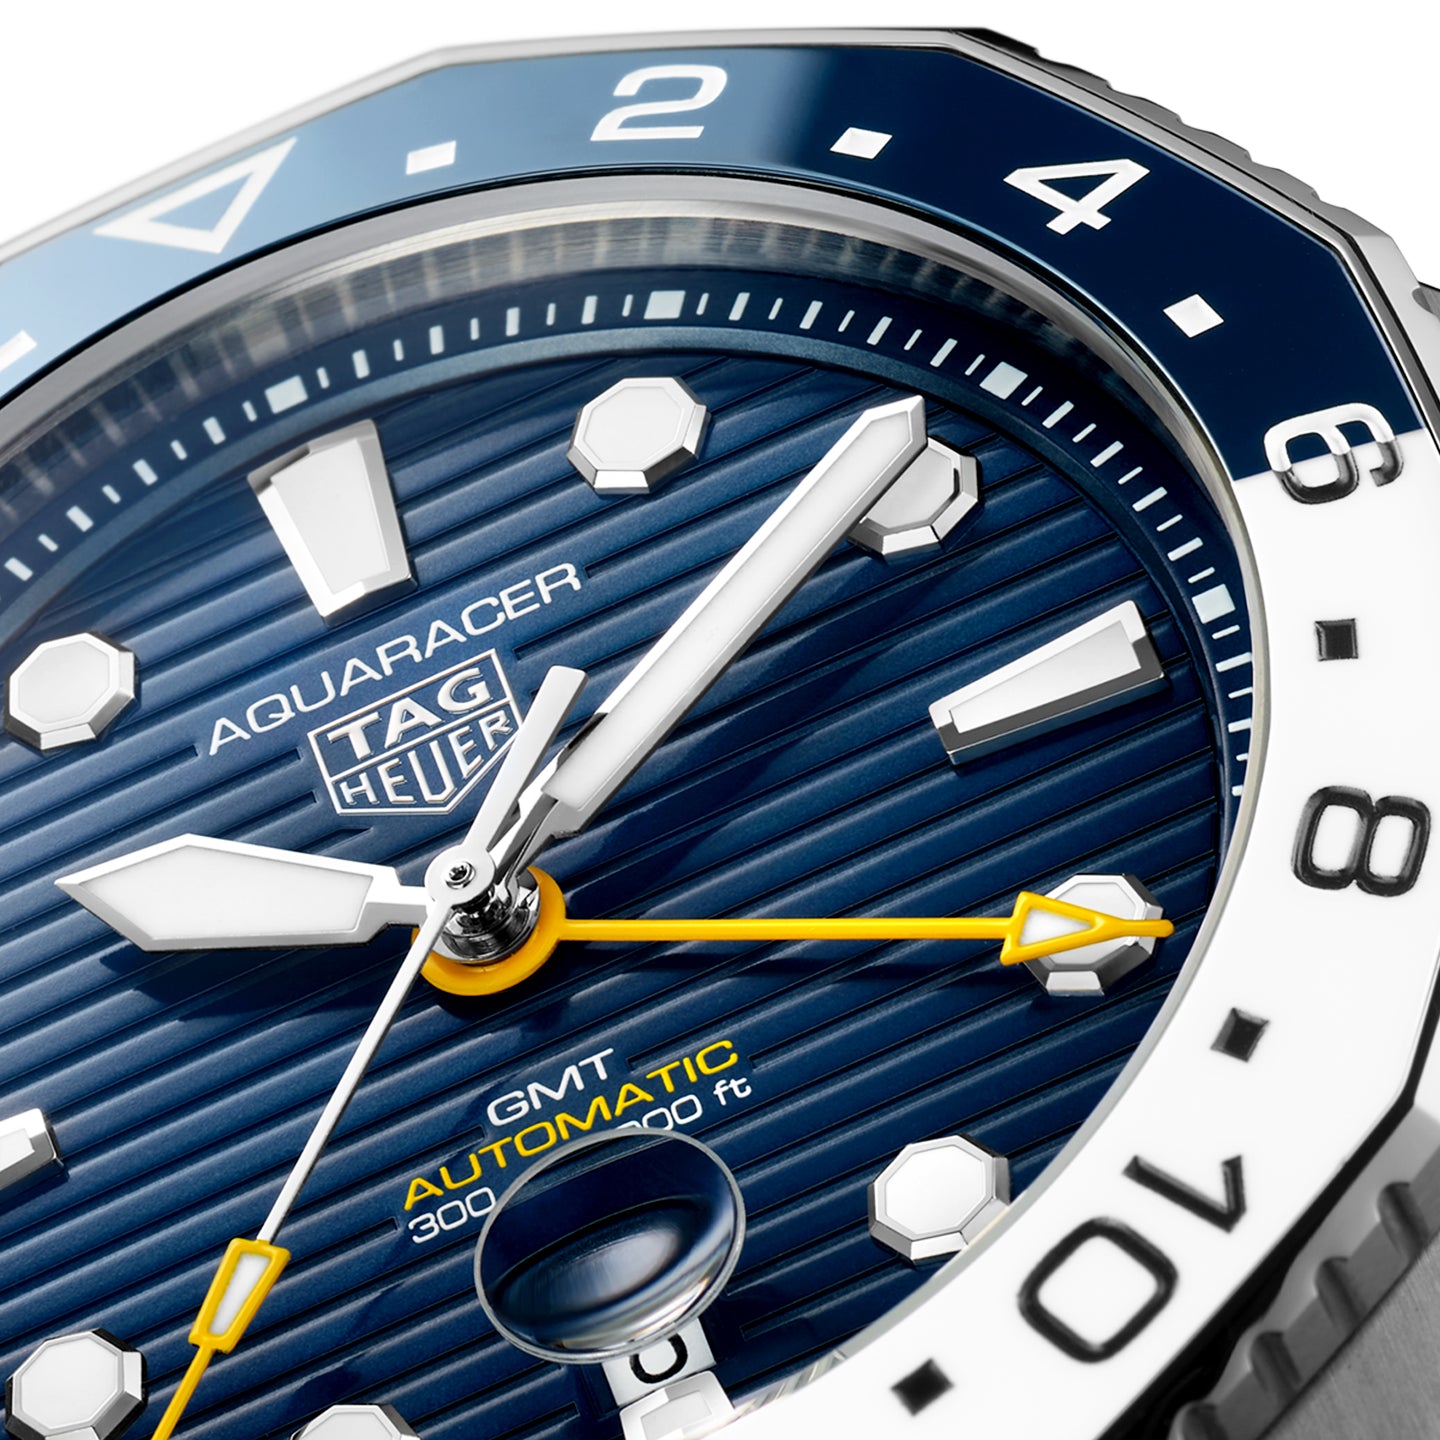 Aquaracer Professional 300 GMT 43mm Strap Watch